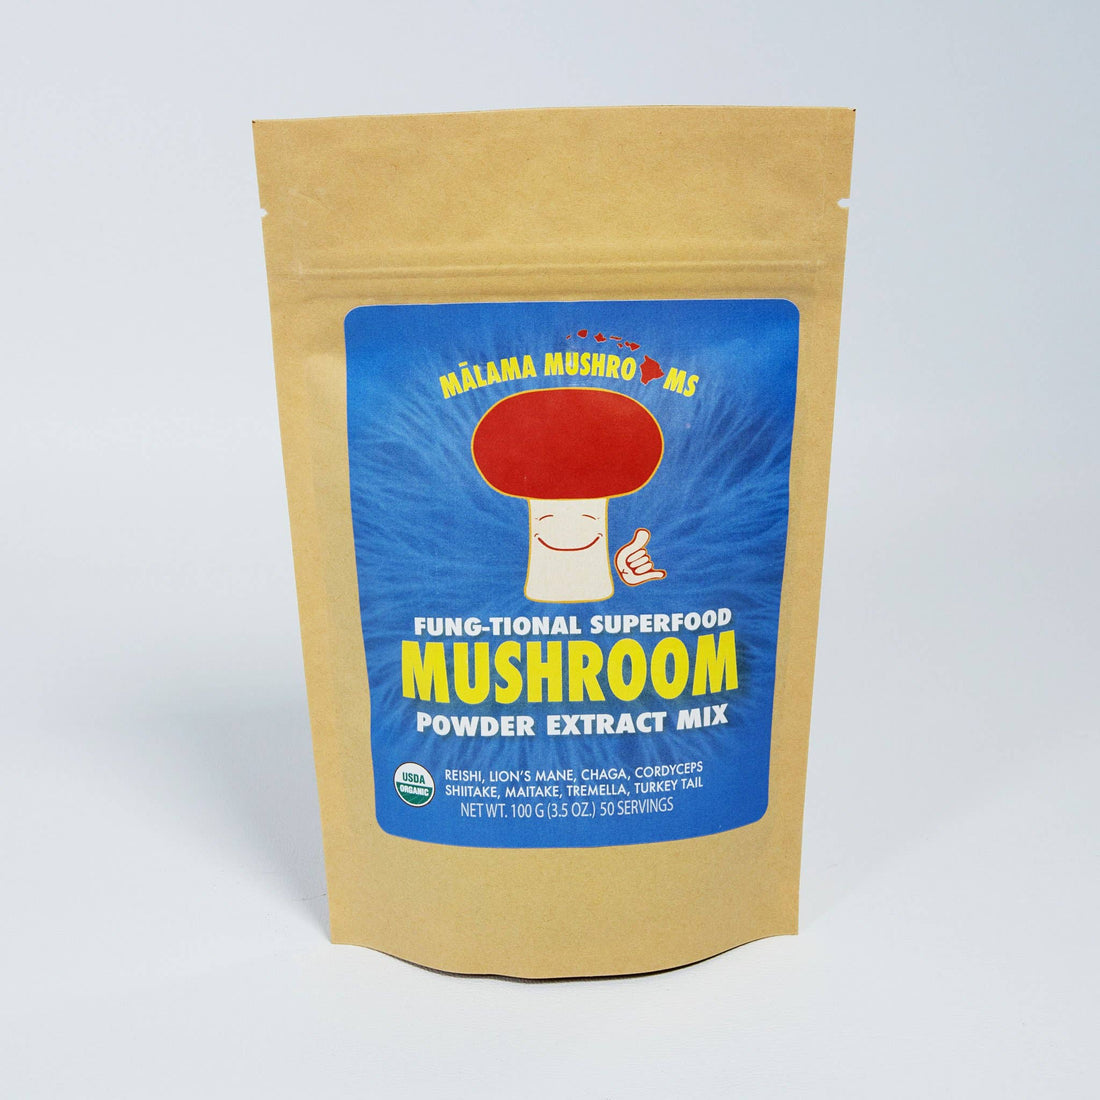 Malama Mushrooms - 8 Mushroom Mix - 3.5 oz